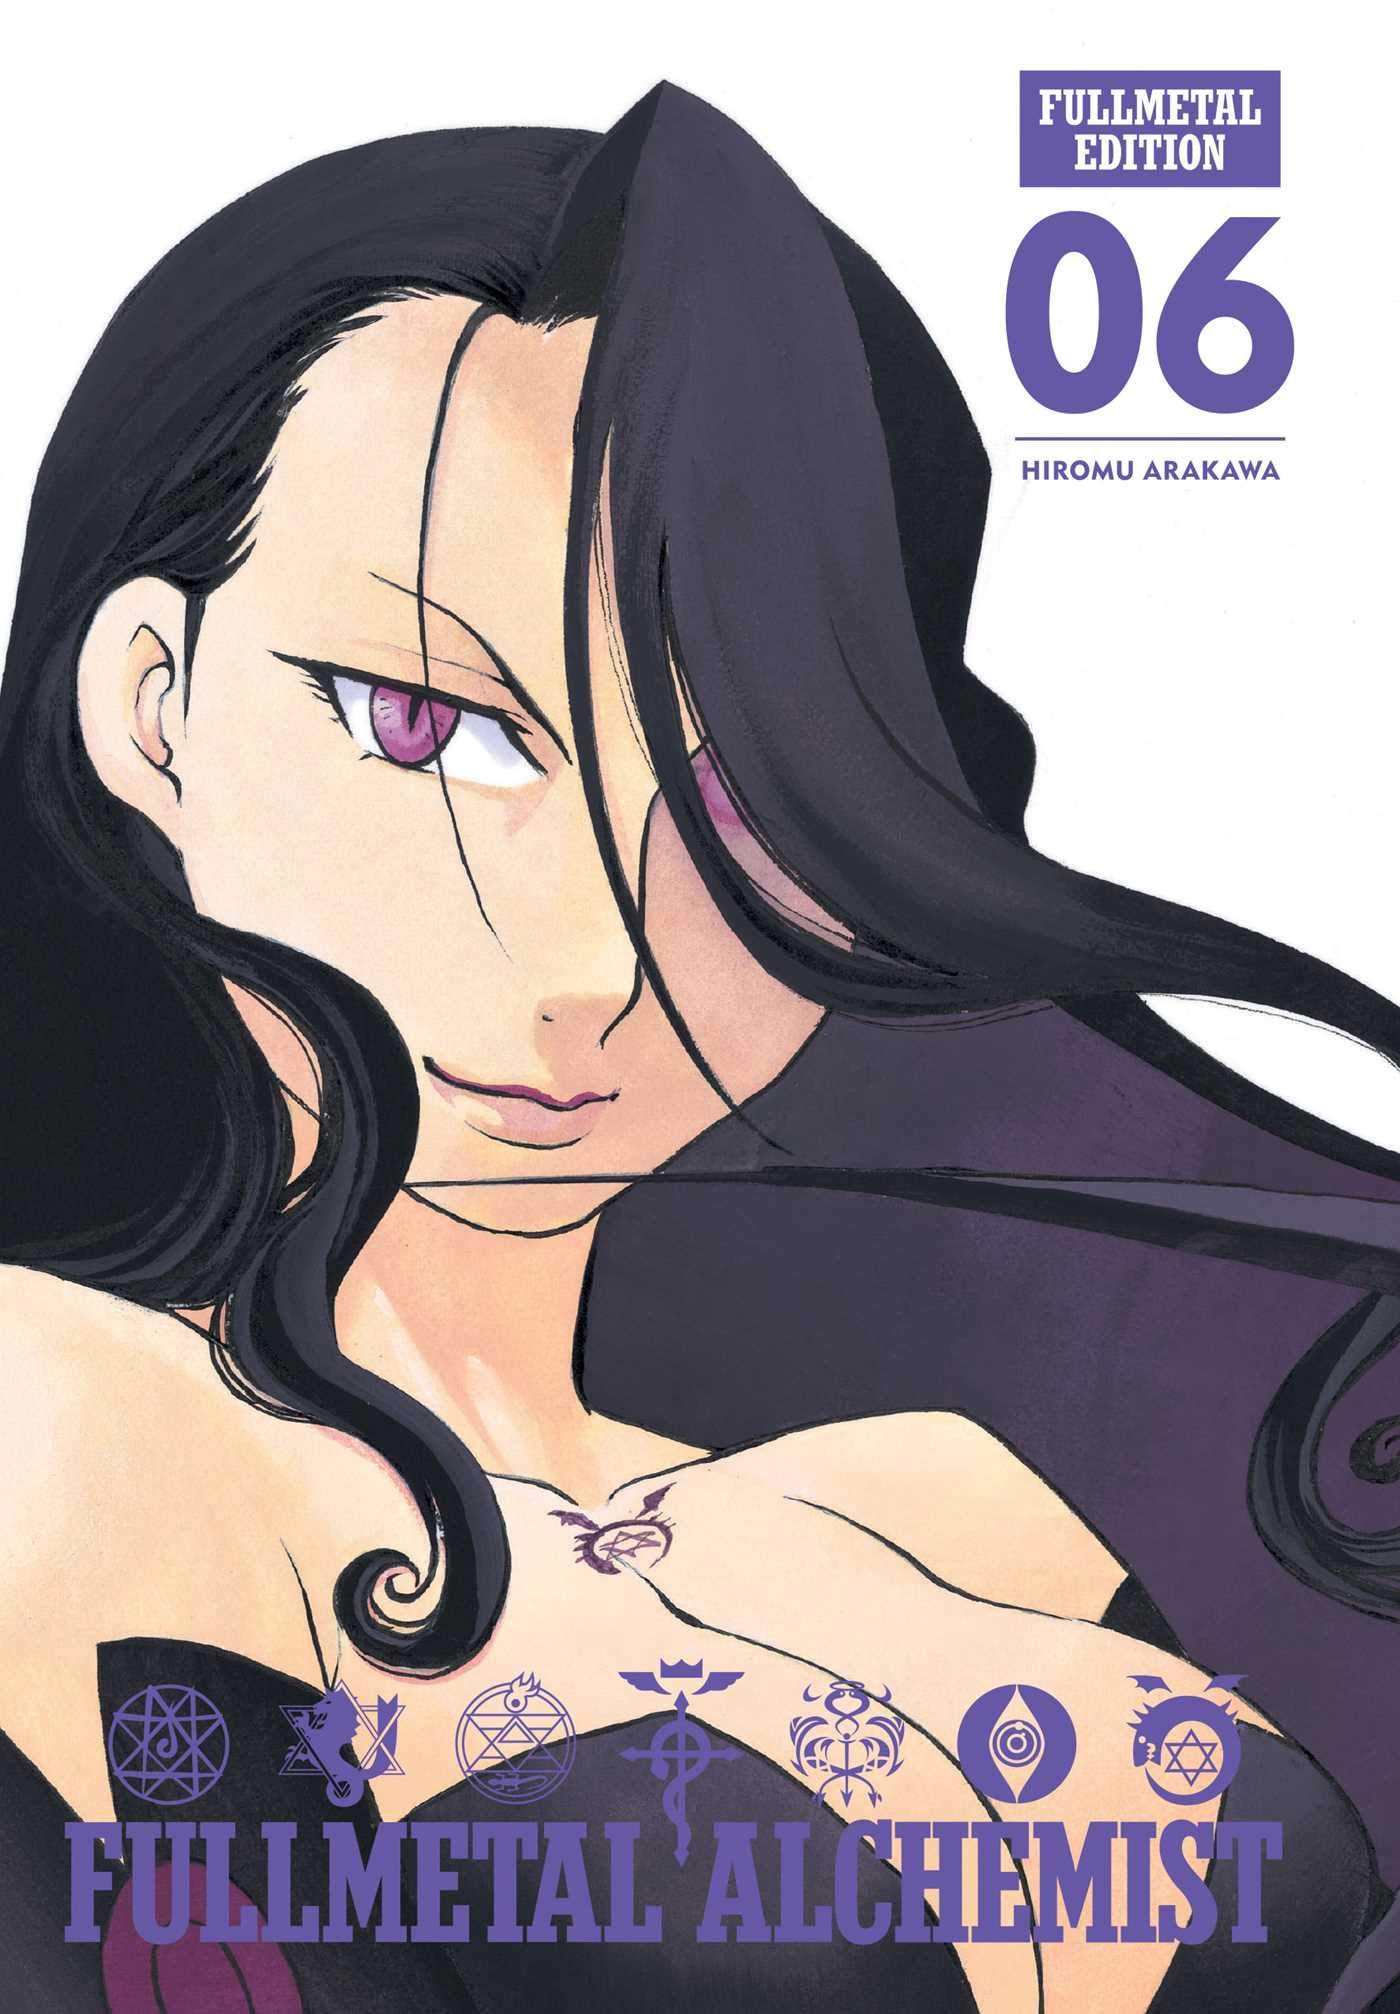  WV2186 Fullmetal Alchemist Characters Anime Manga Art